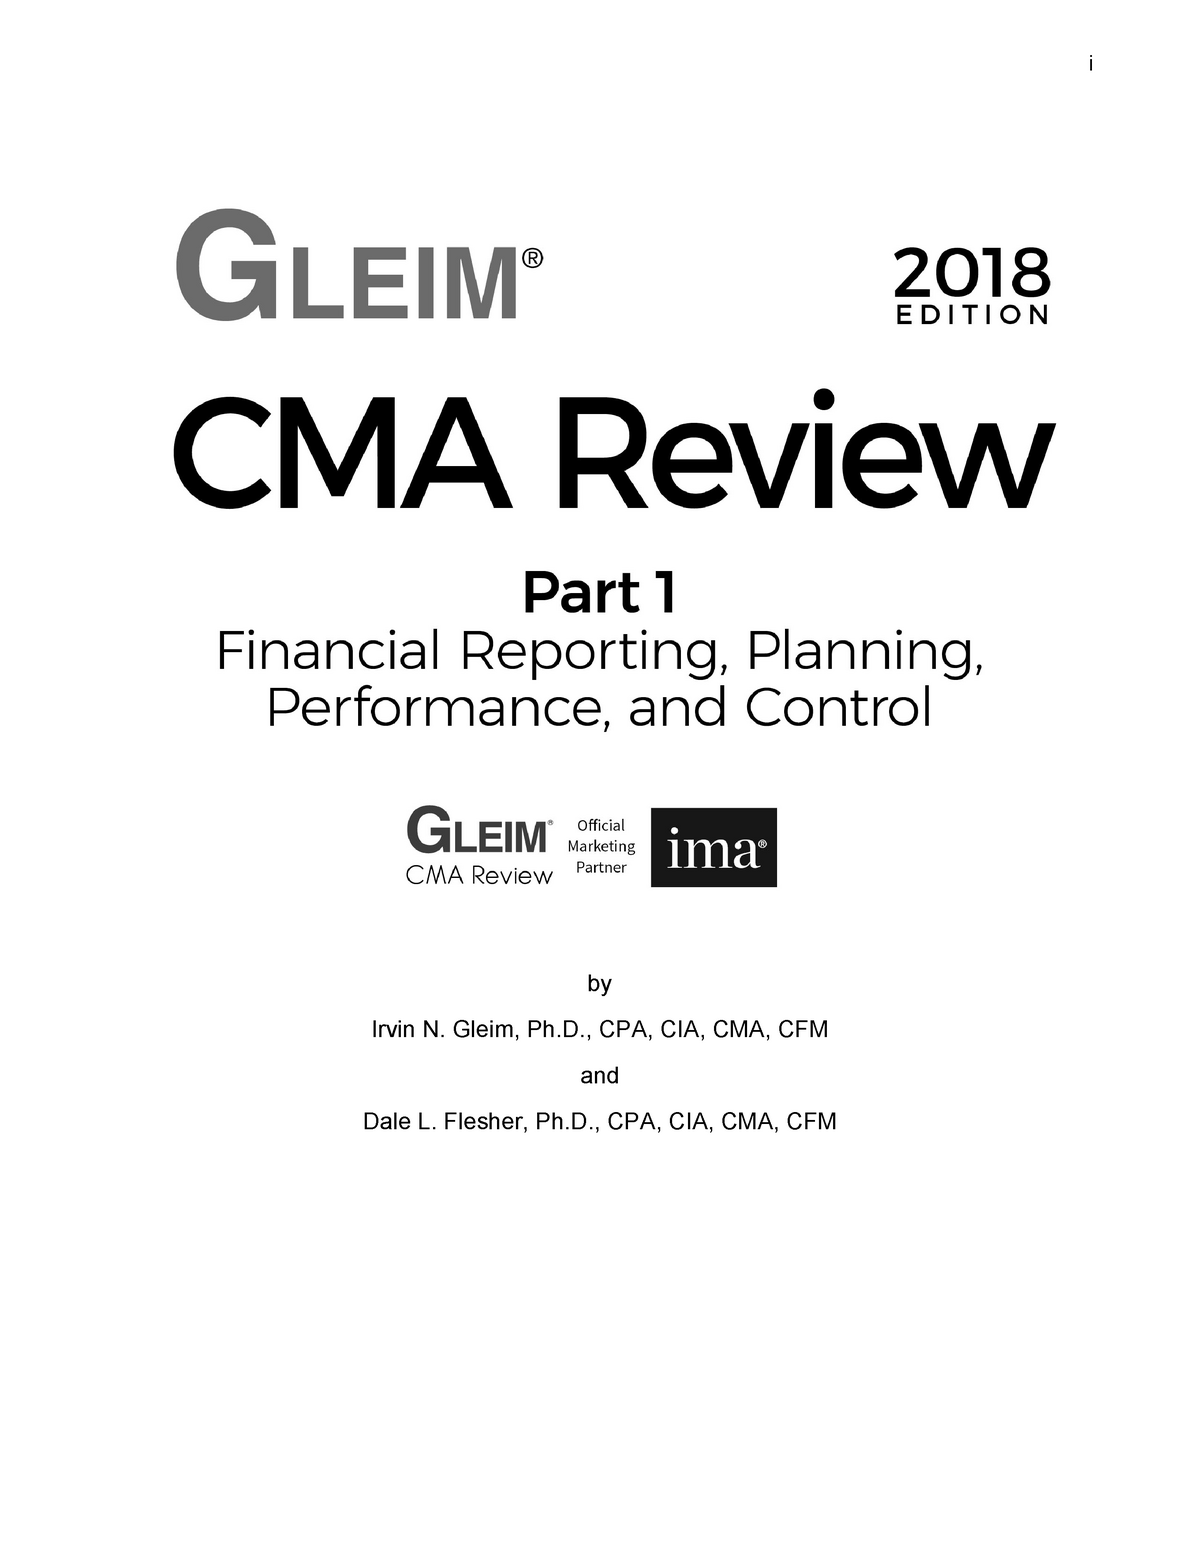 cpa books free download pdf 2018 by gleim